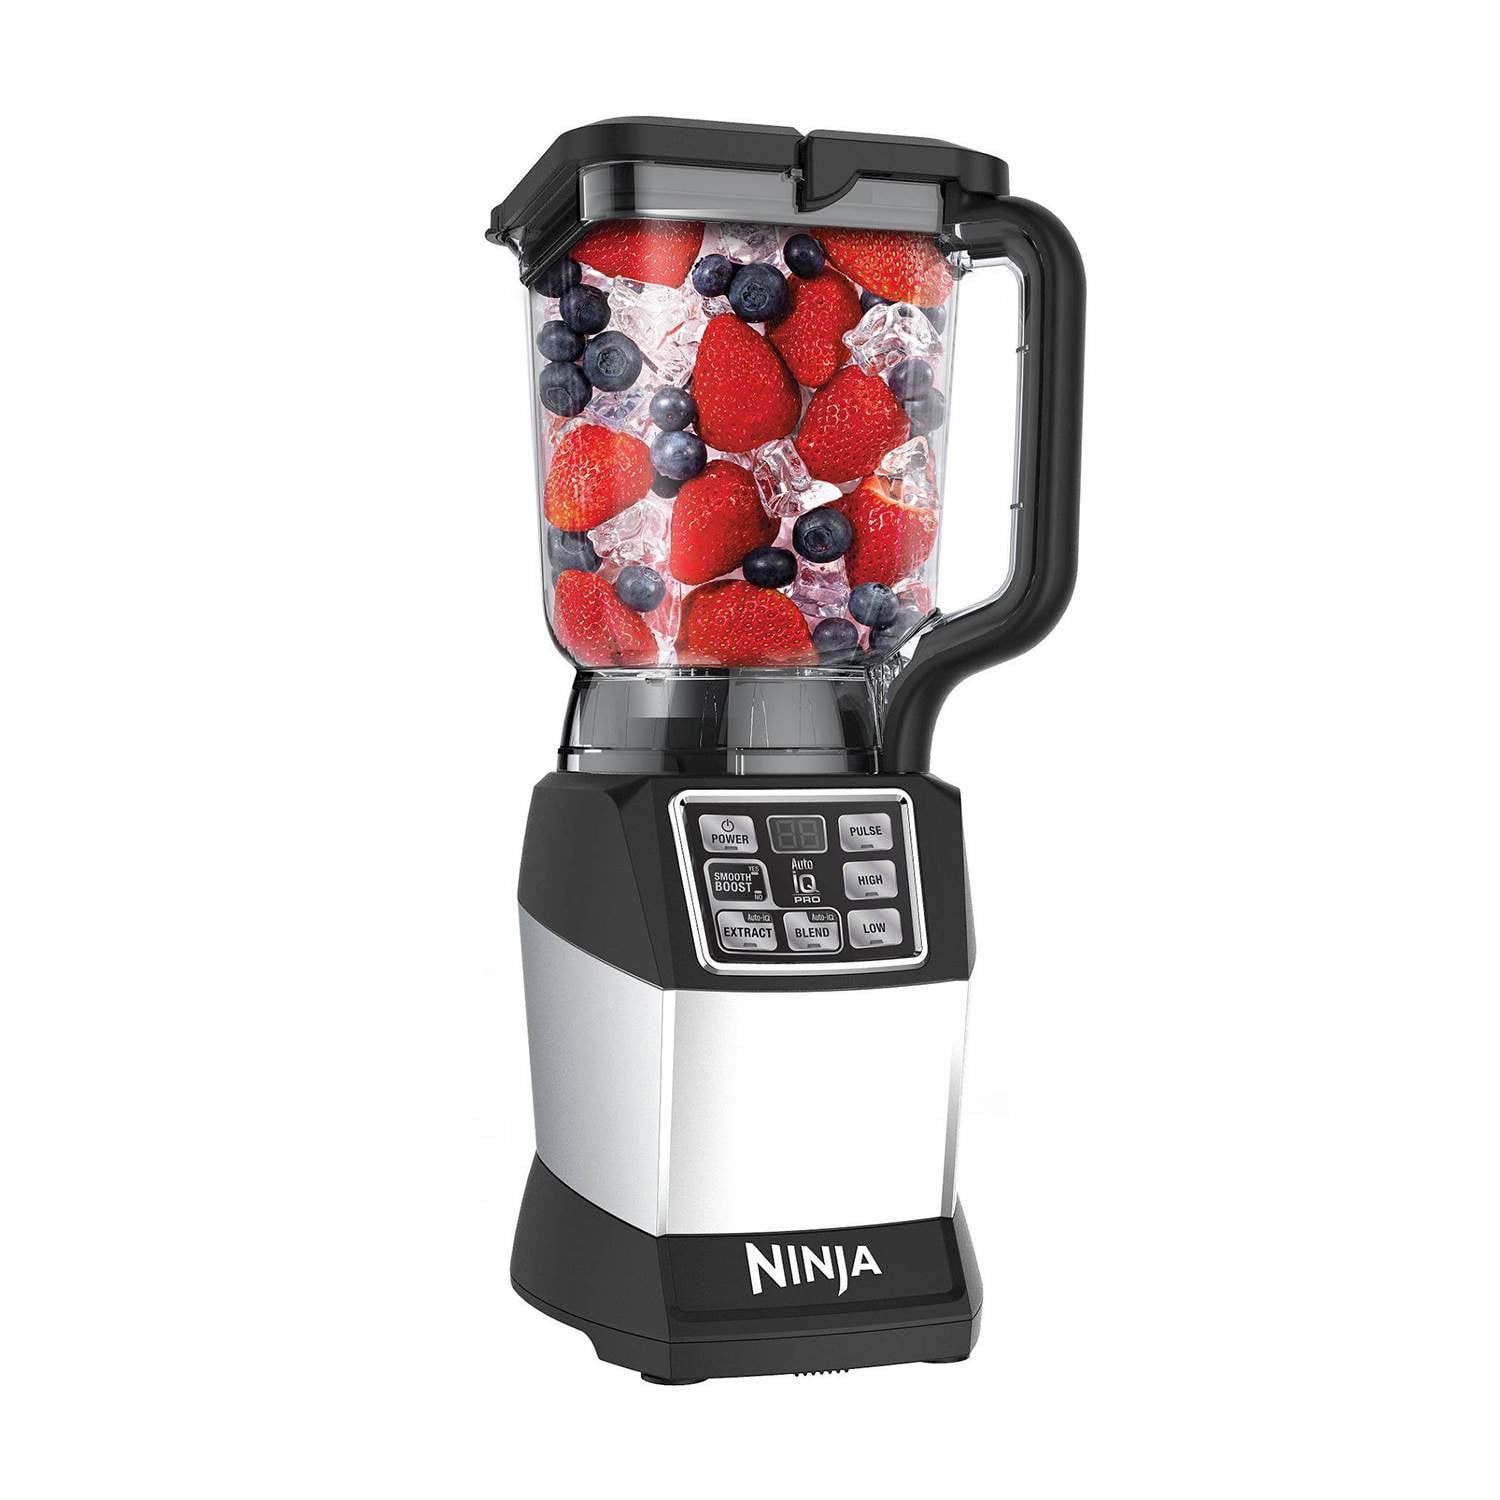 Nutri Ninja Single-Serve Blender with Auto-iQ - household items - by owner  - housewares sale - craigslist